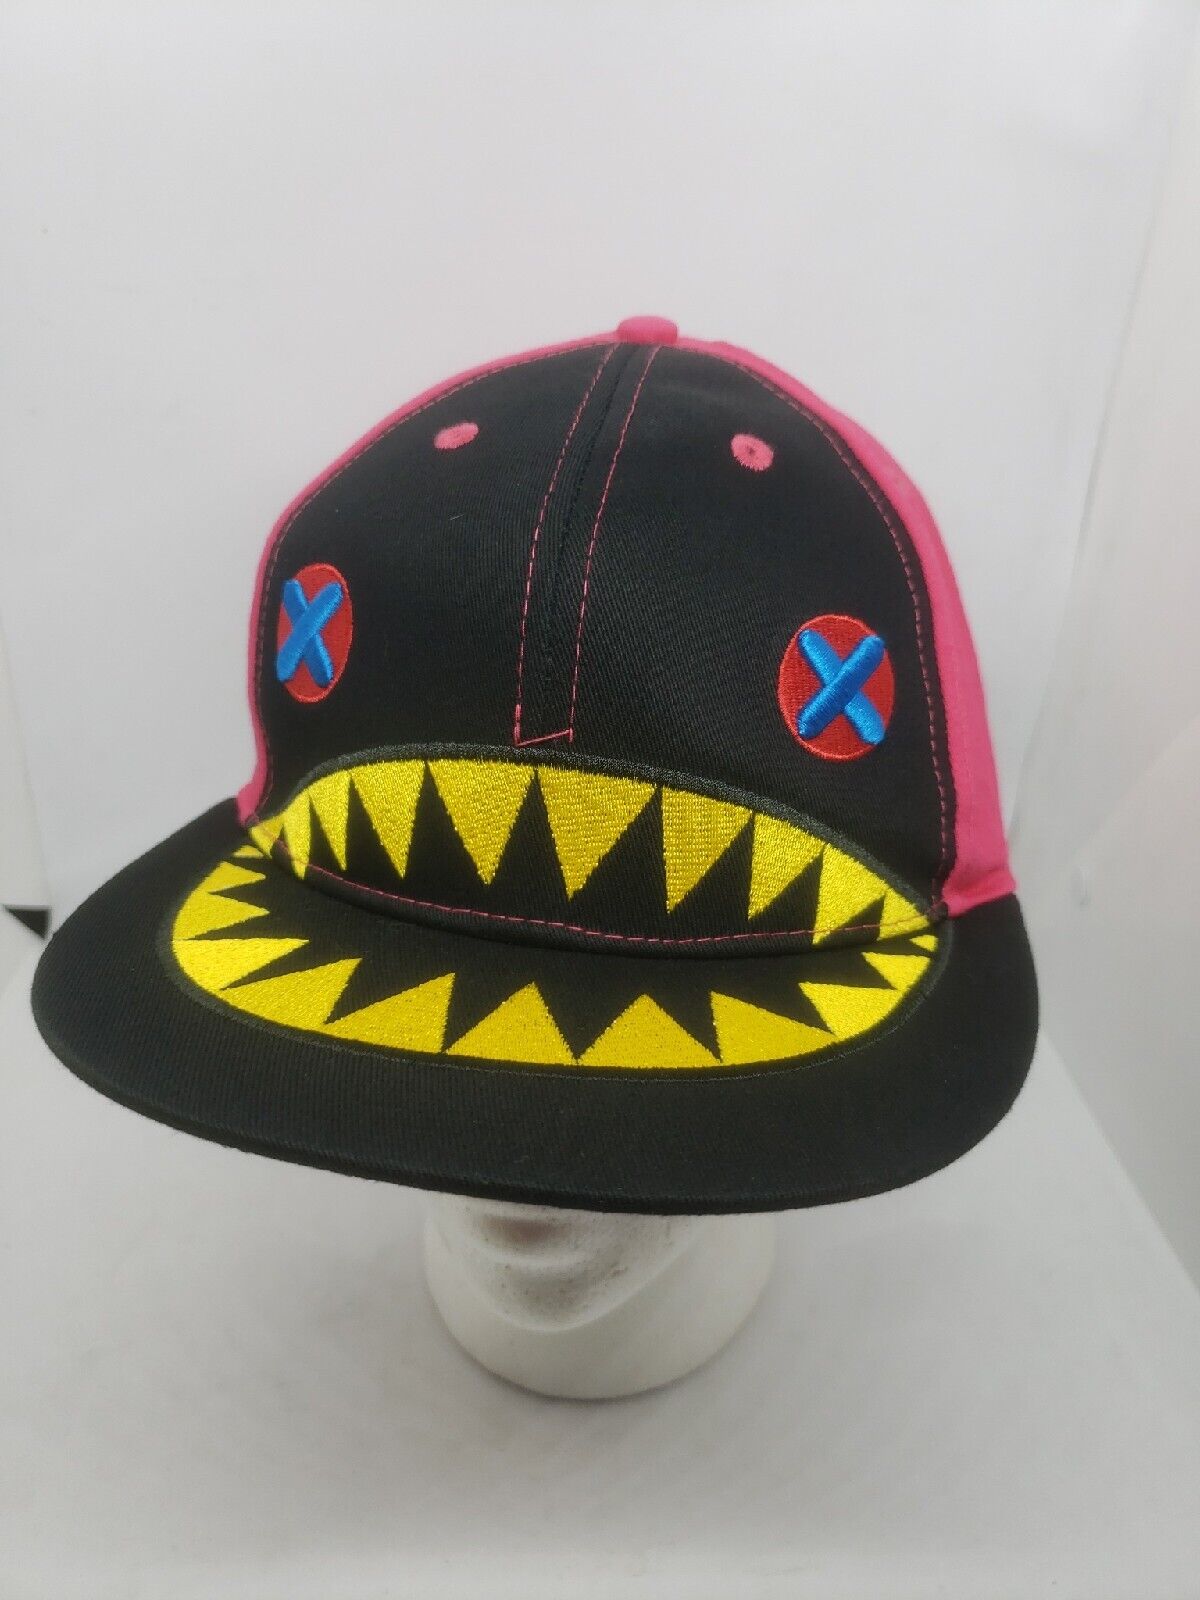 Authentic Black Adjustable Elstinko Snapback Hat | Locomo eBay Pink Cap One Size